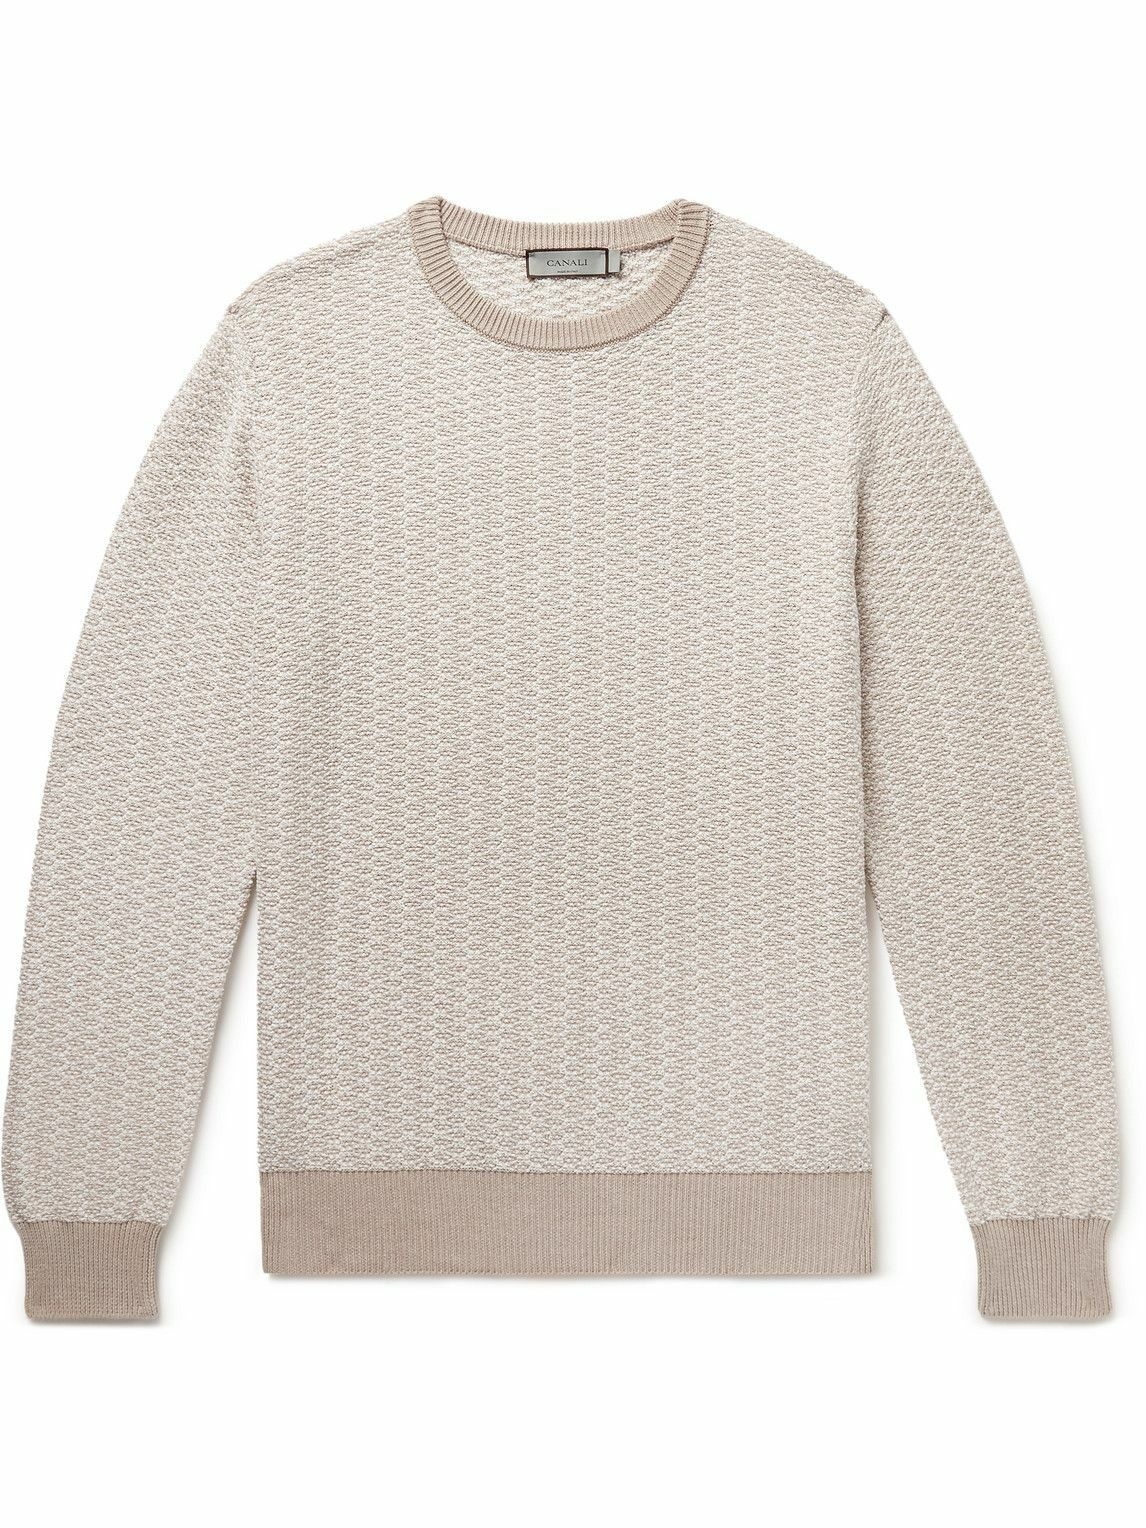 Photo: Canali - Textured-Knit Cotton-Blend Sweater - Neutrals